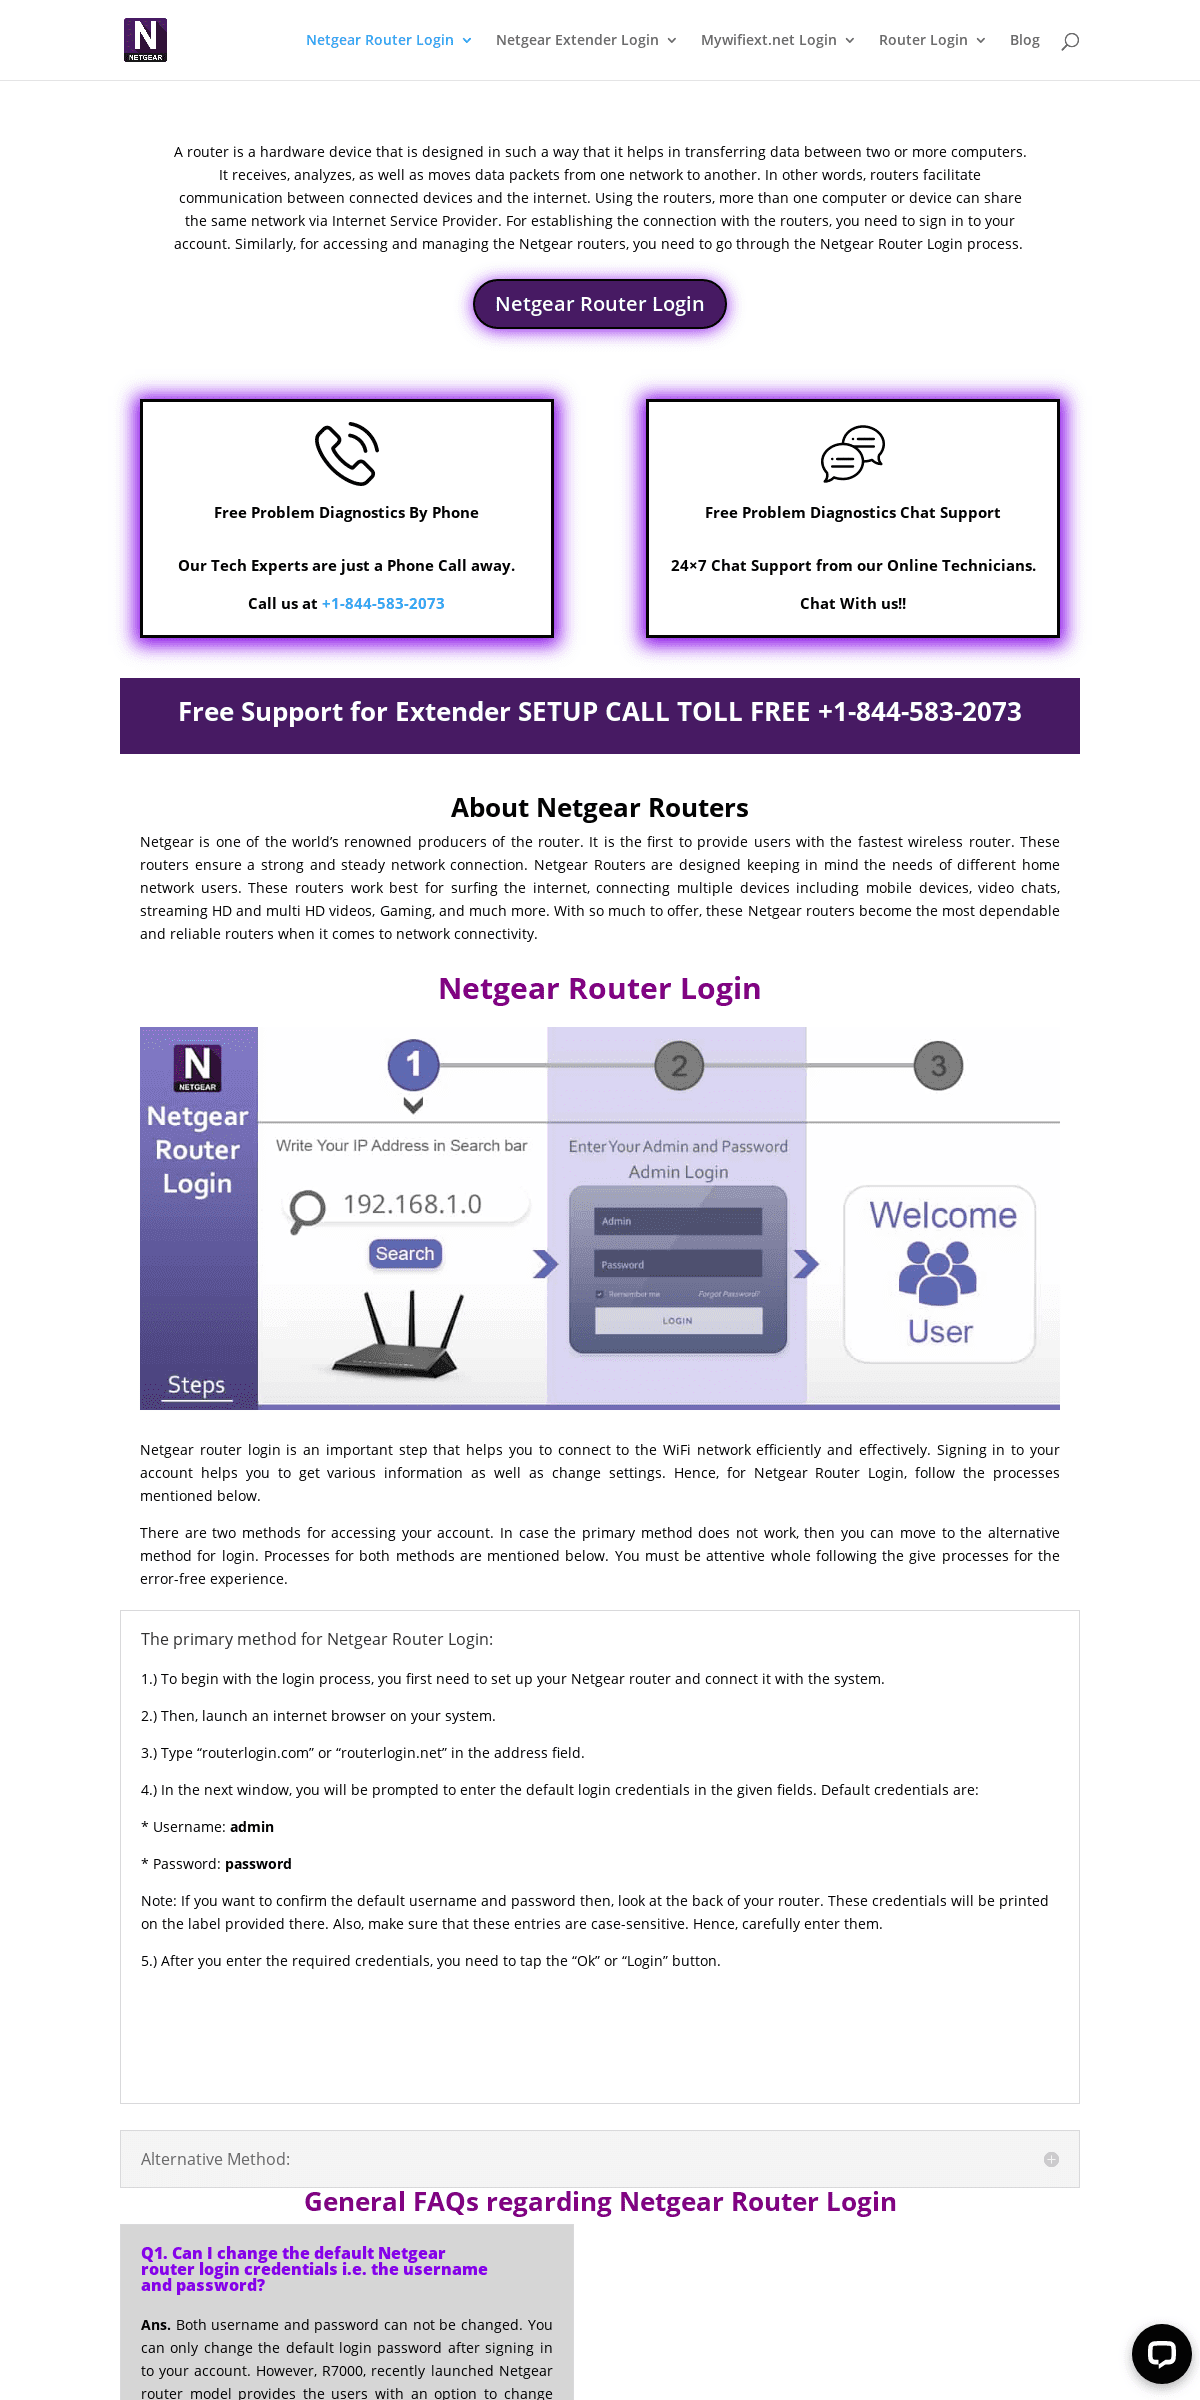 A complete backup of netgearrouterloginn.com